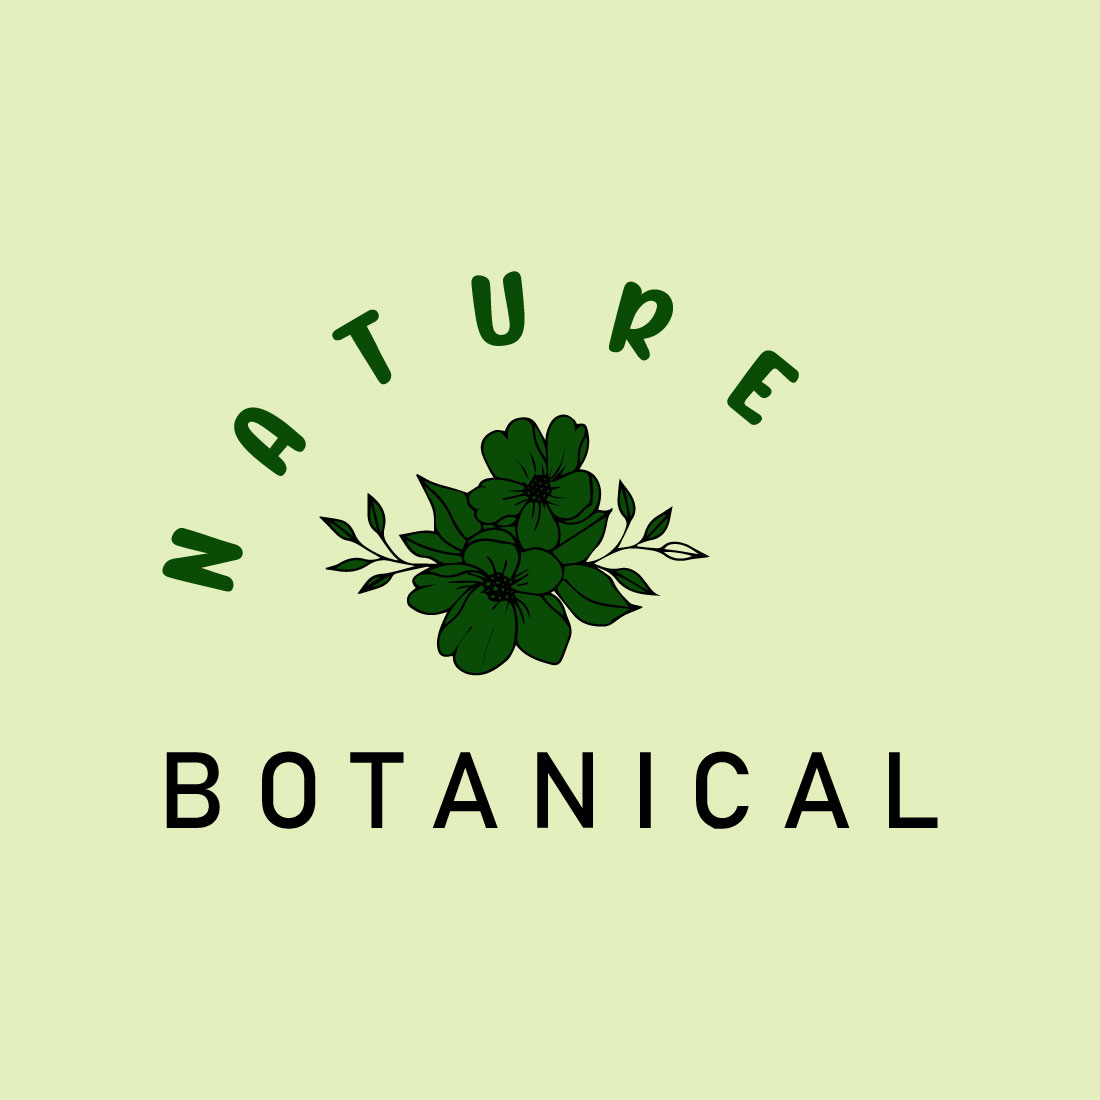 Free sketch hand drawn botanical logo preview image.